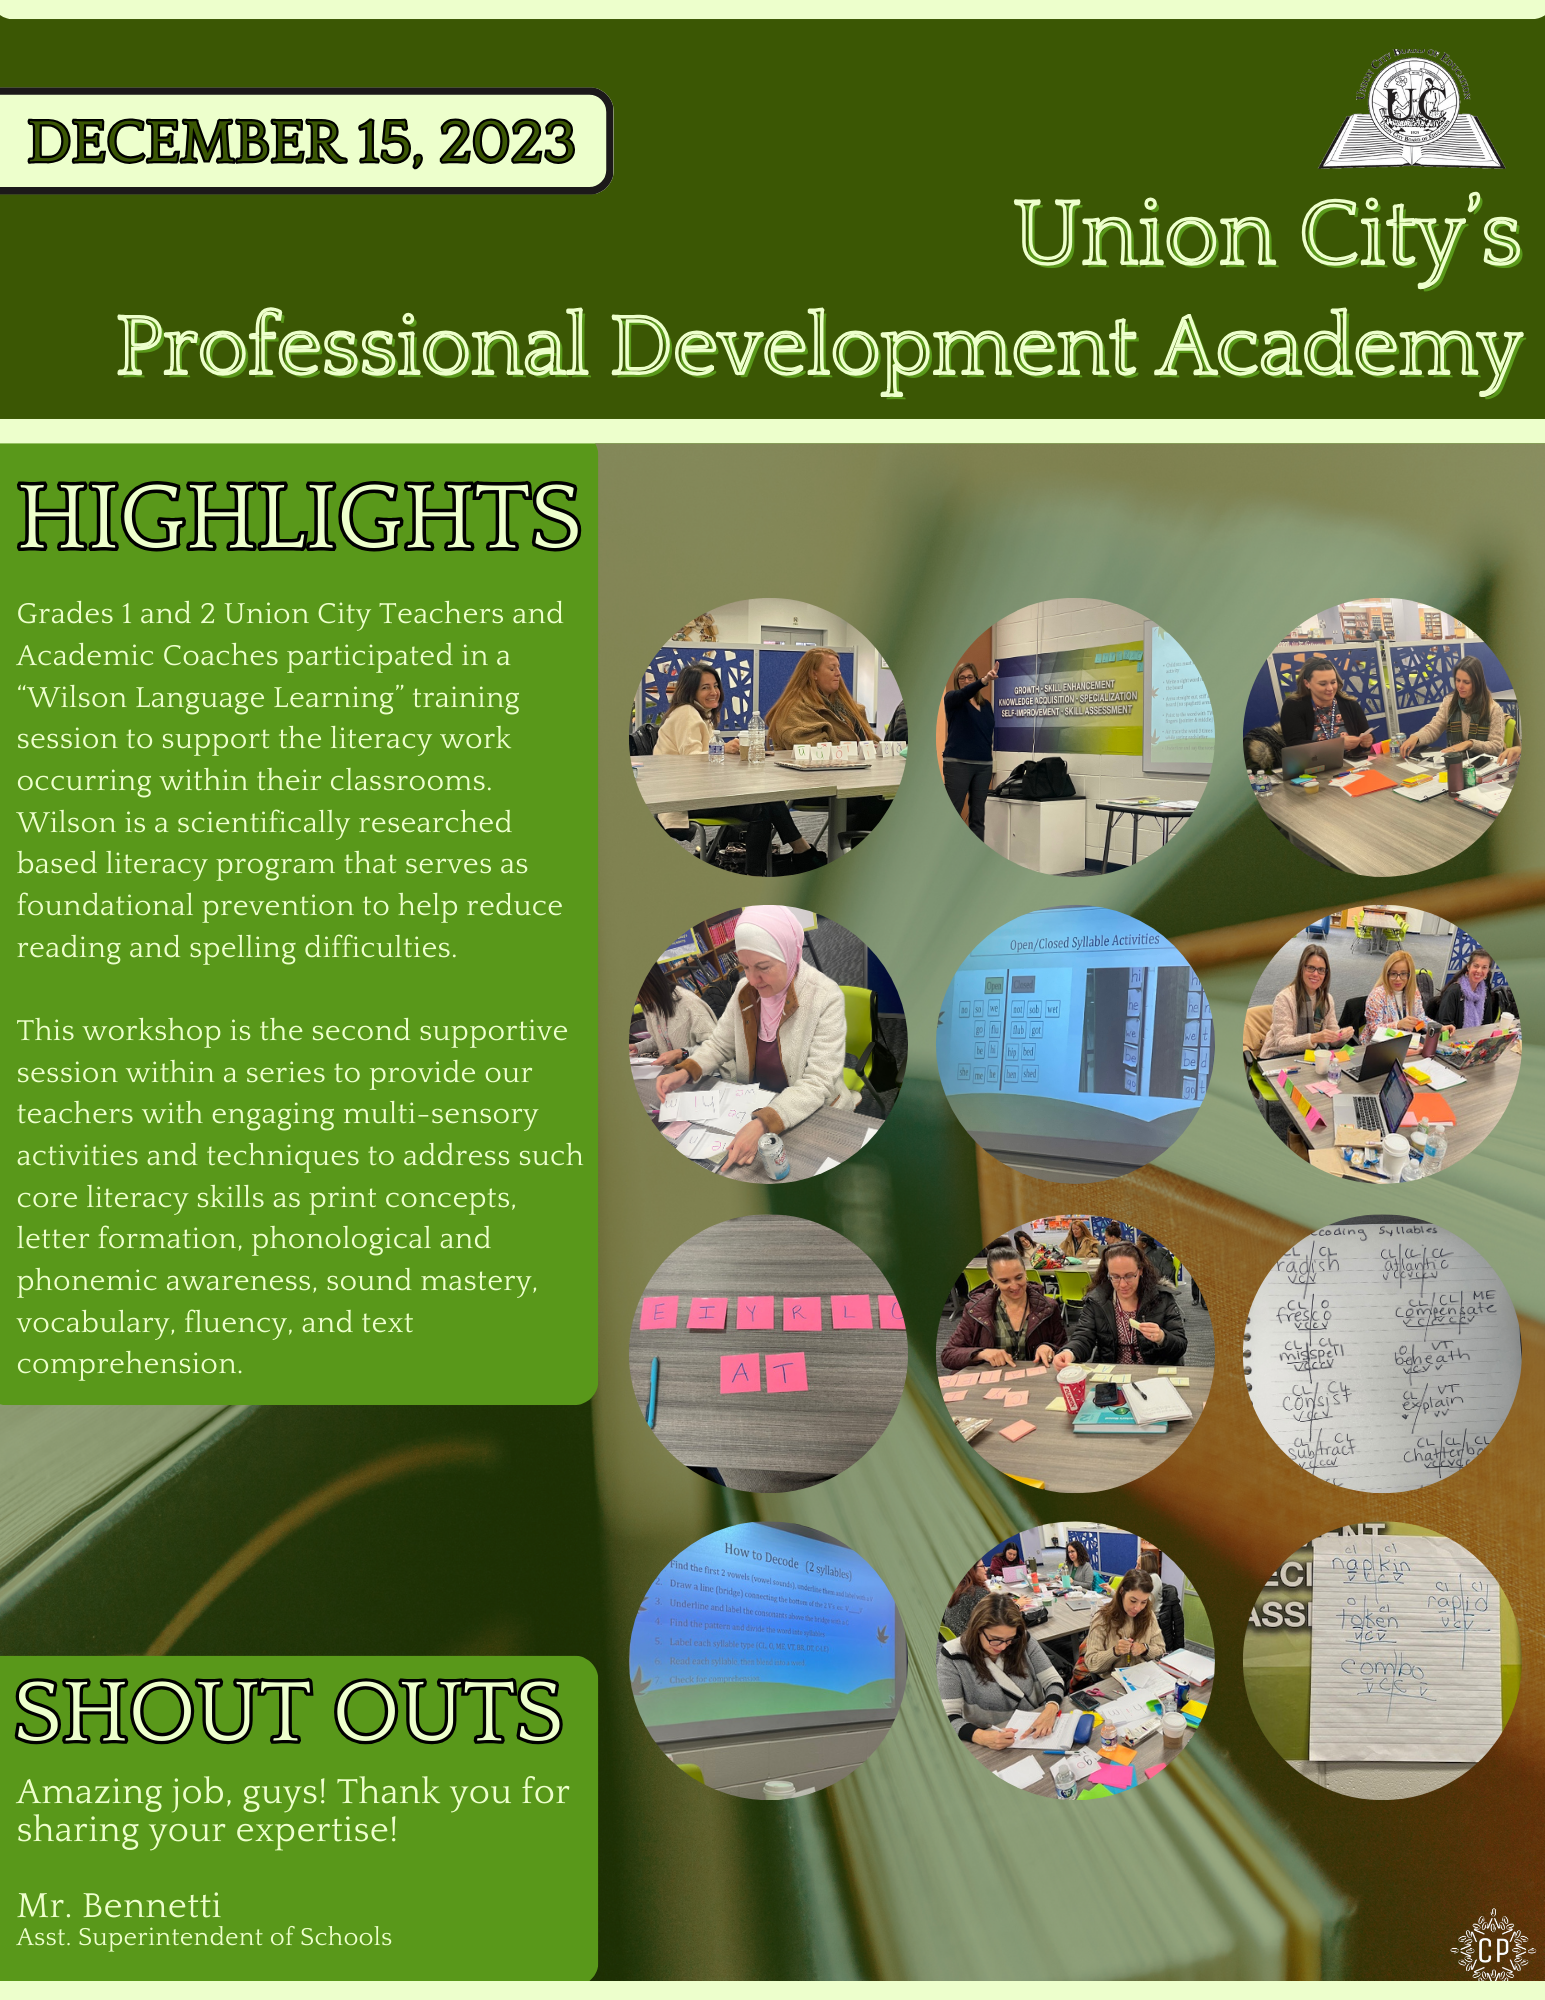 Union City Professional Development Academy-December 2023